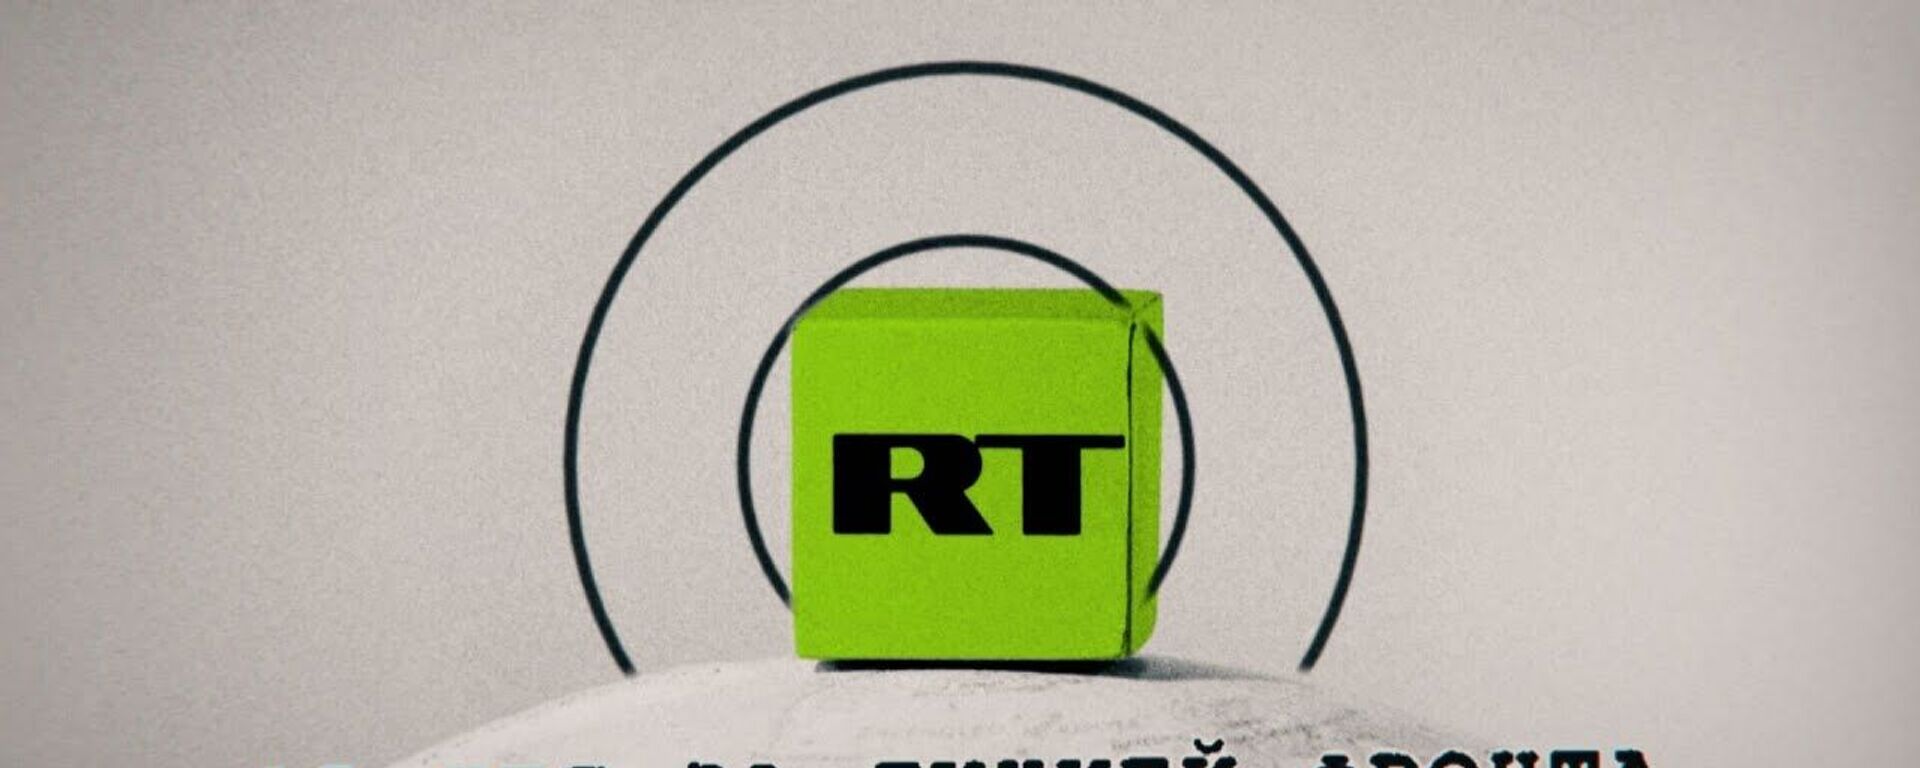 Зеленая угроза: 15 лет каналу Russia Today  - Sputnik Латвия, 1920, 10.12.2020